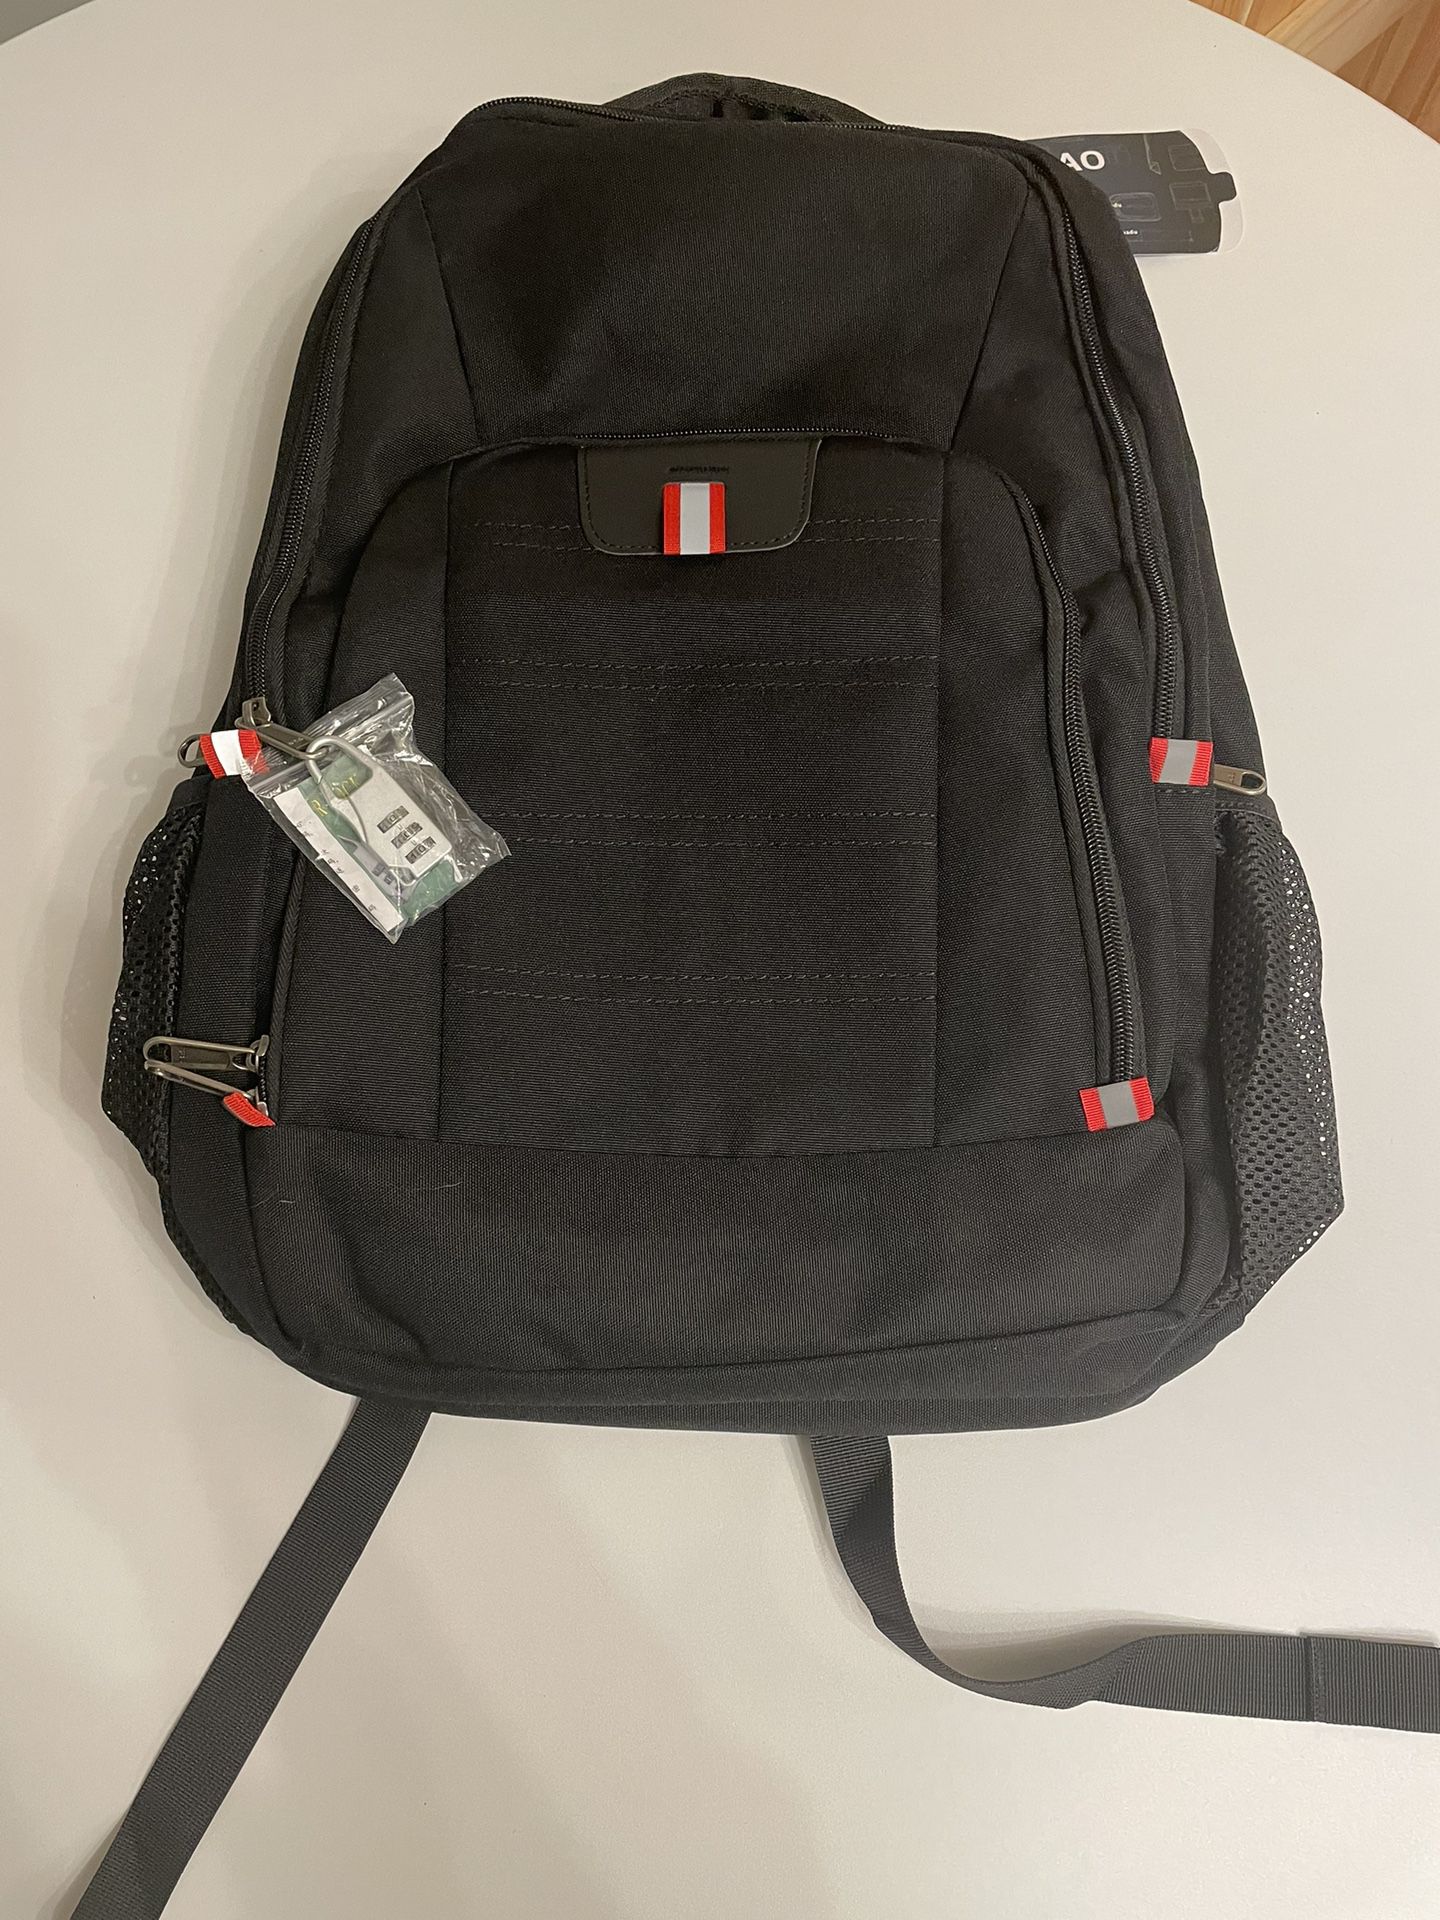 Travel Laptop Backpack 